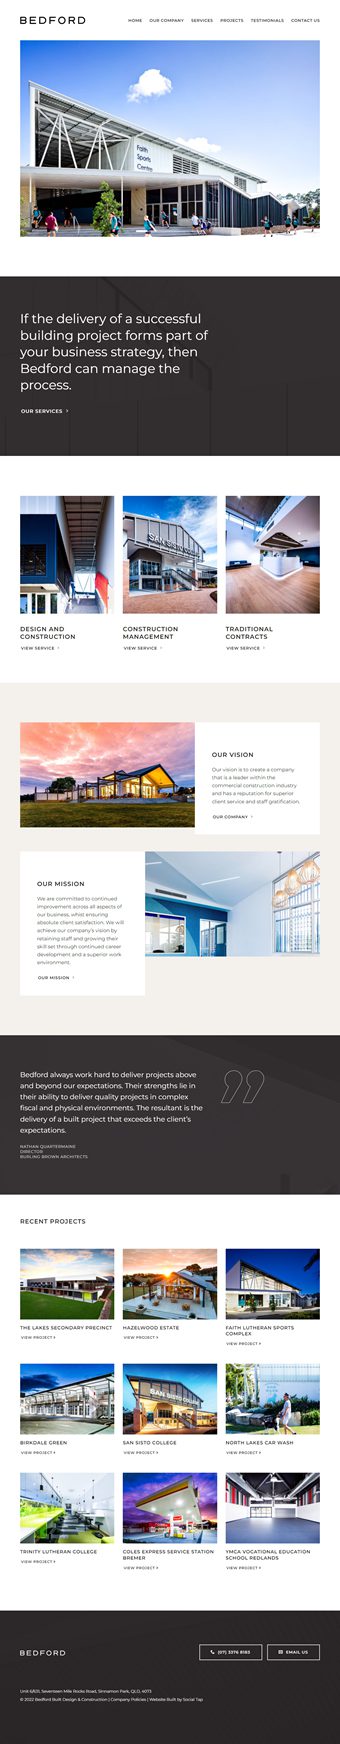 Our Work Hospitality Tourism Website Design Bedford Built